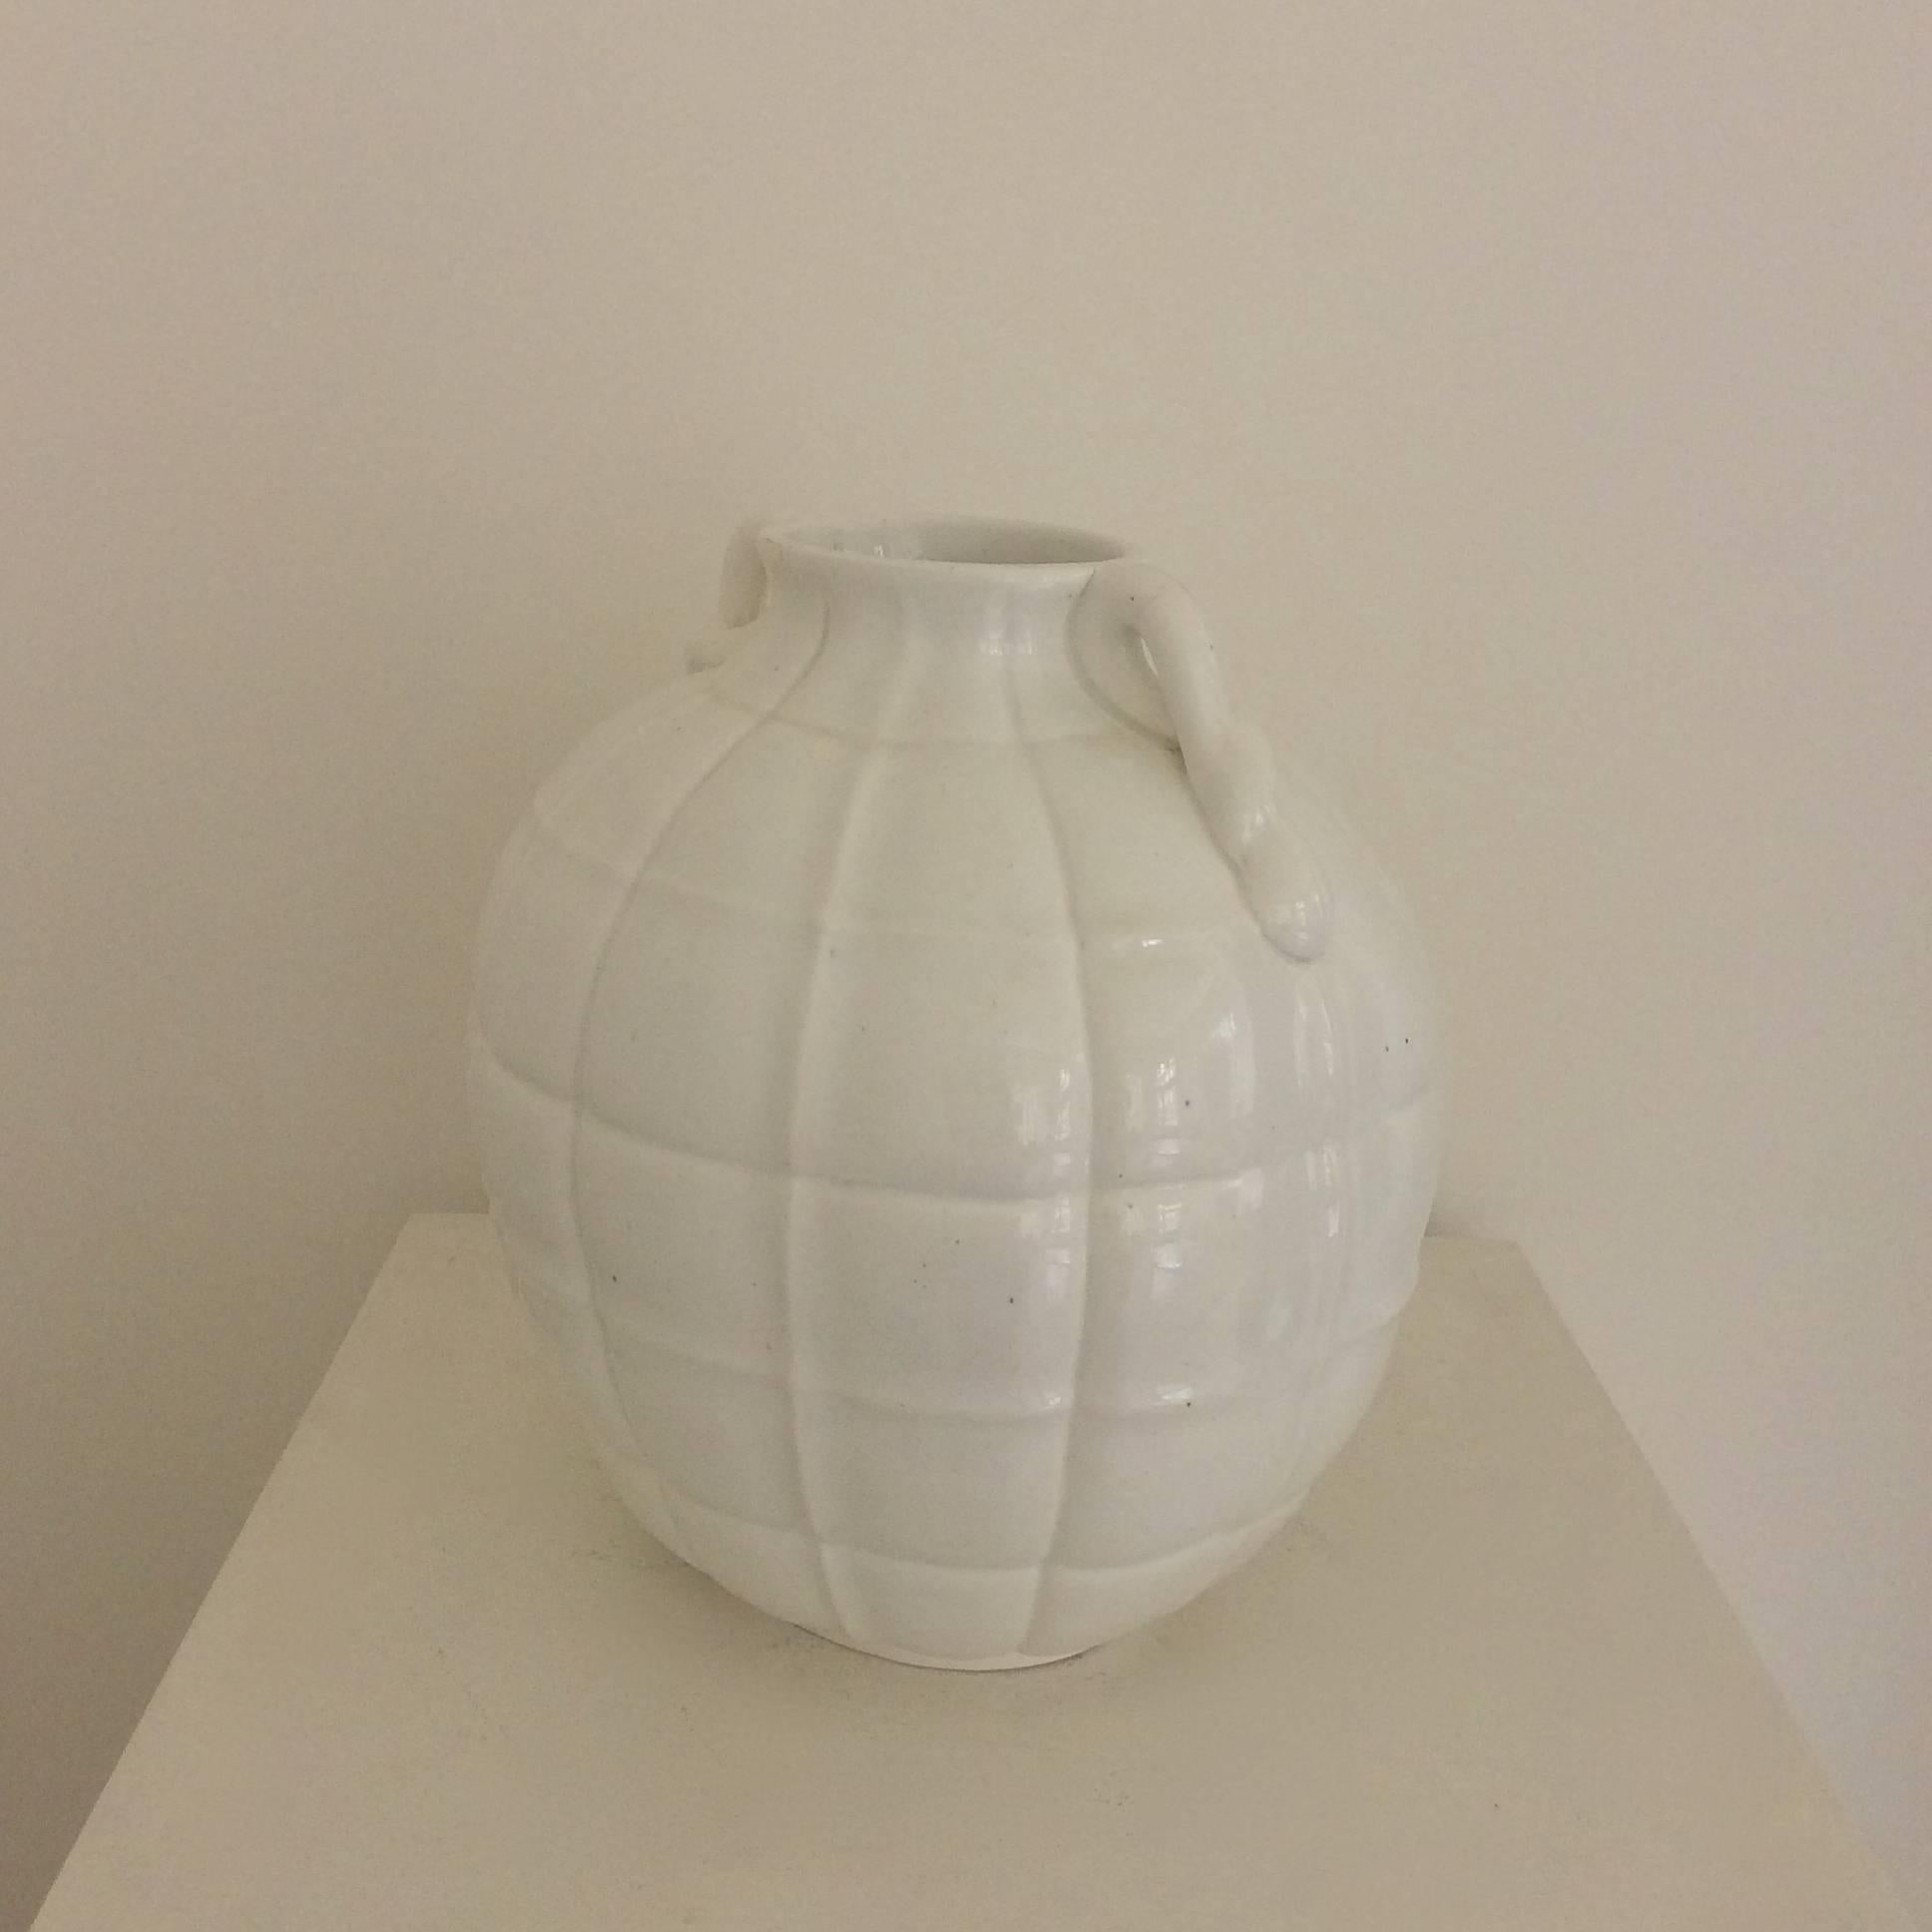 Nice Gio Ponti quilted vase, white glazed ceramic, circa 1930, Italy.
Manufactured by Richard Ginori, labelled underside.
Good original condition.